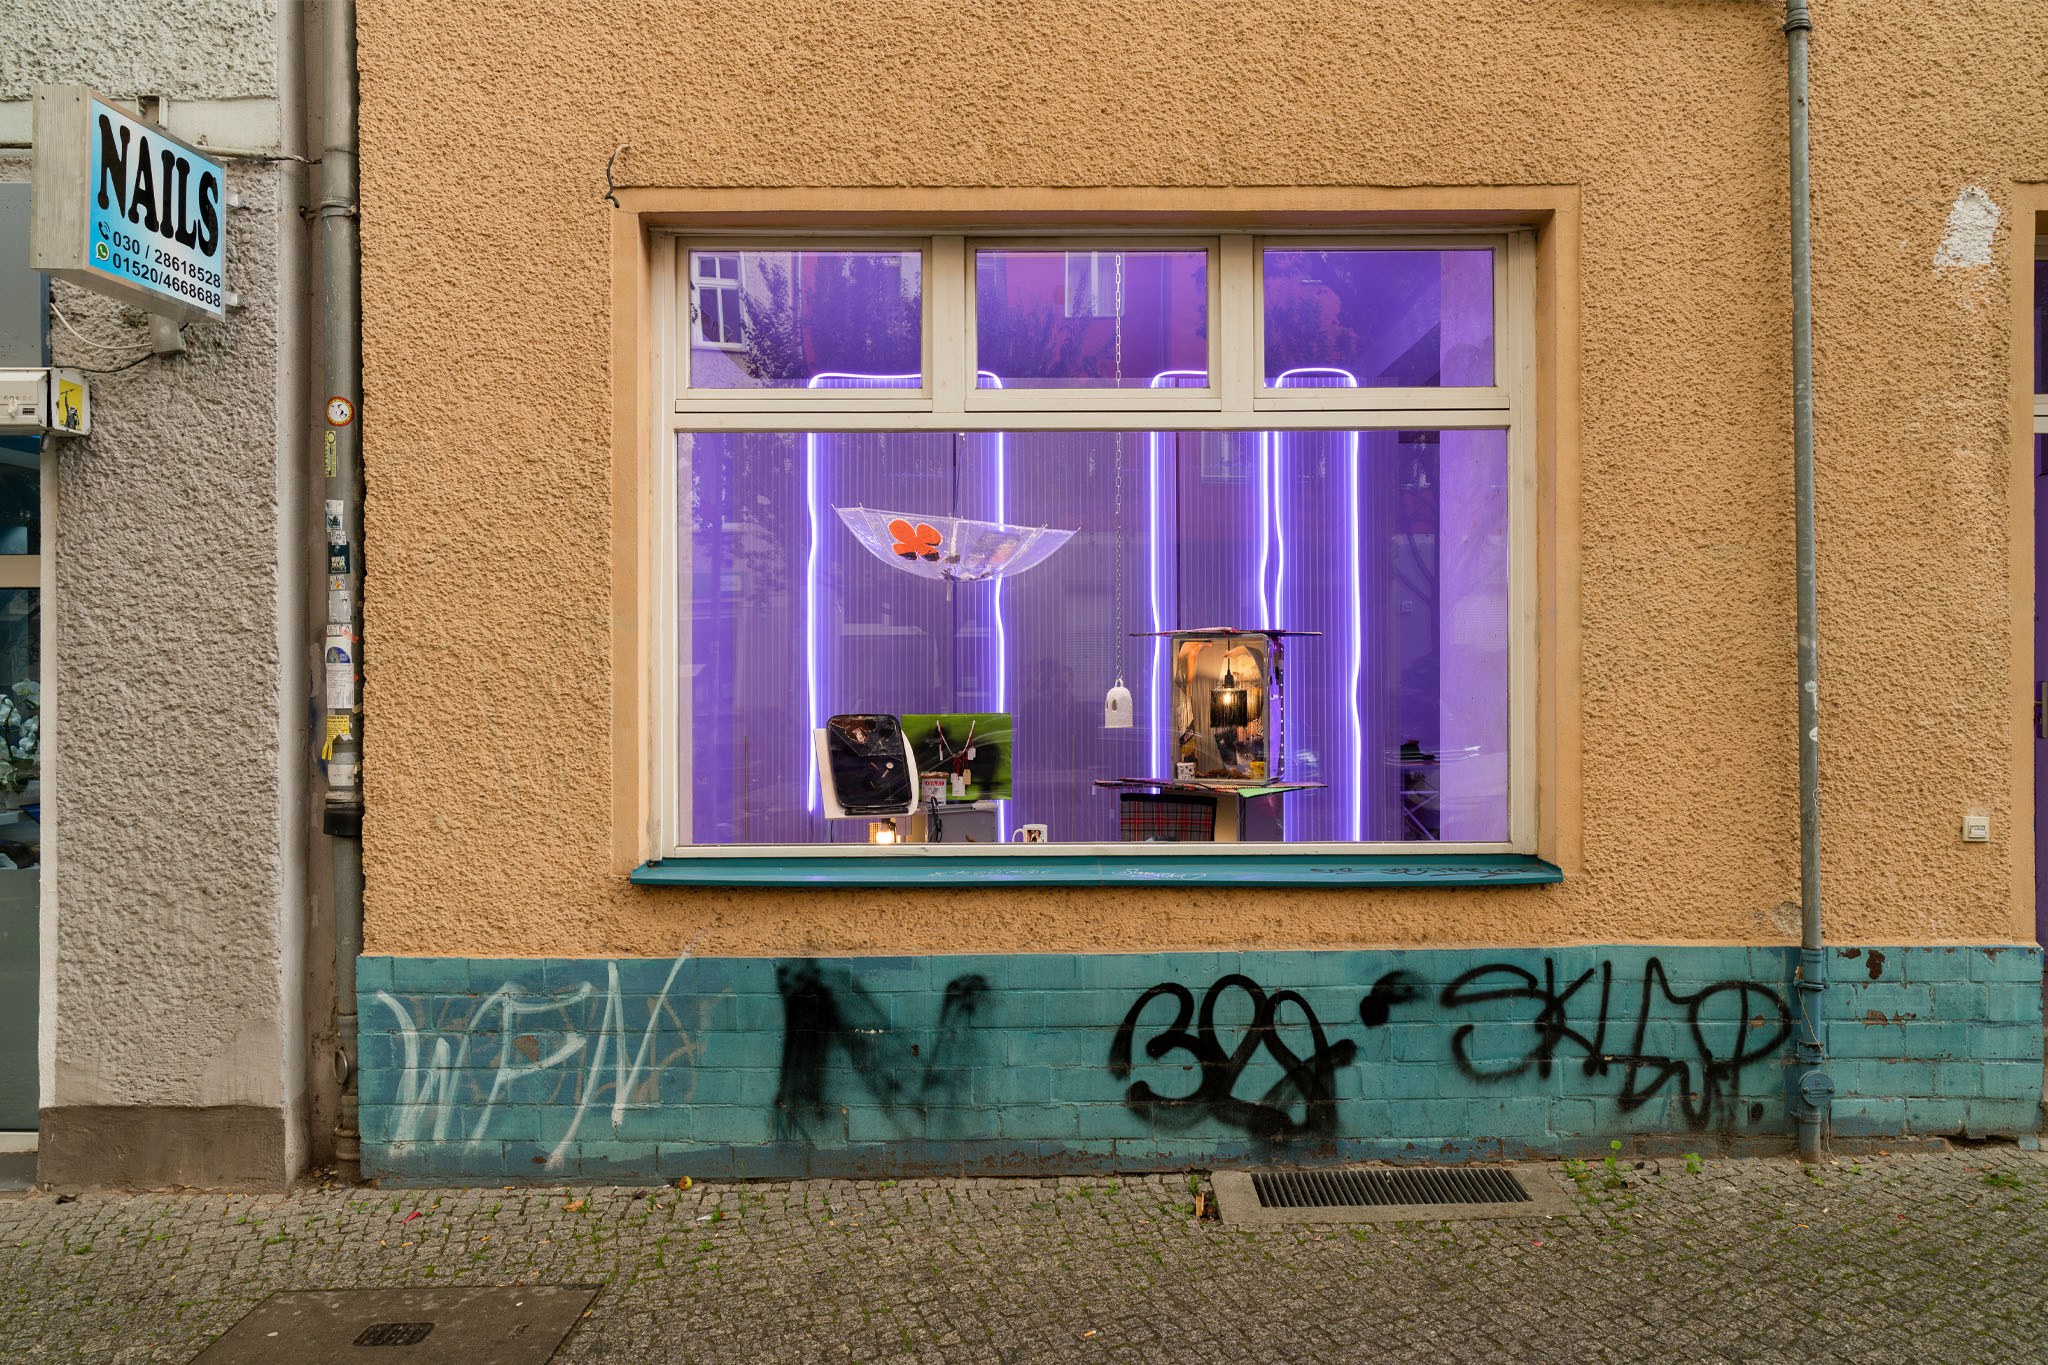 Black Palm â€“ Sonja Cvitkovic, Daily Deals, New Toni, Berlin, 2022, Installation view